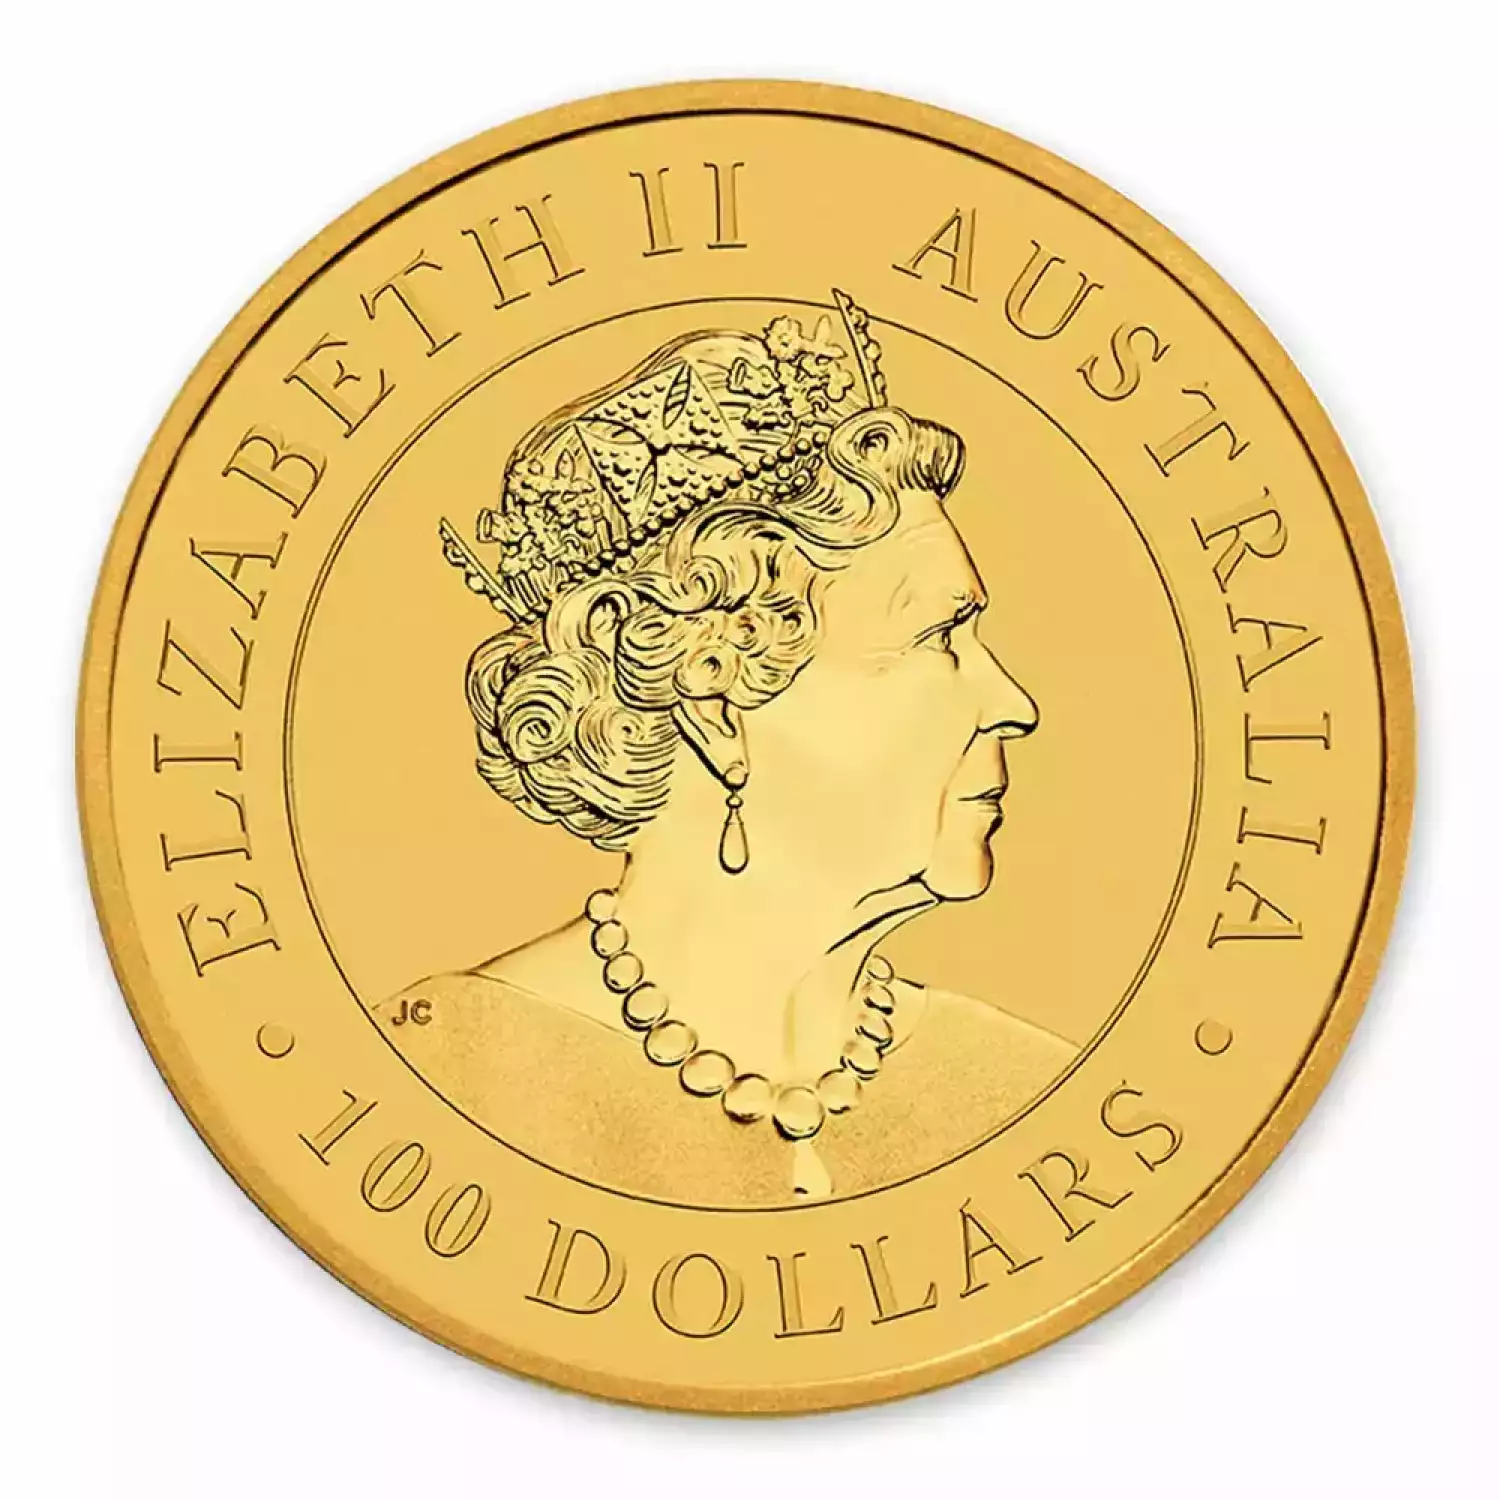 2019 1oz Australian Perth Mint Gold Kangaroo (3)